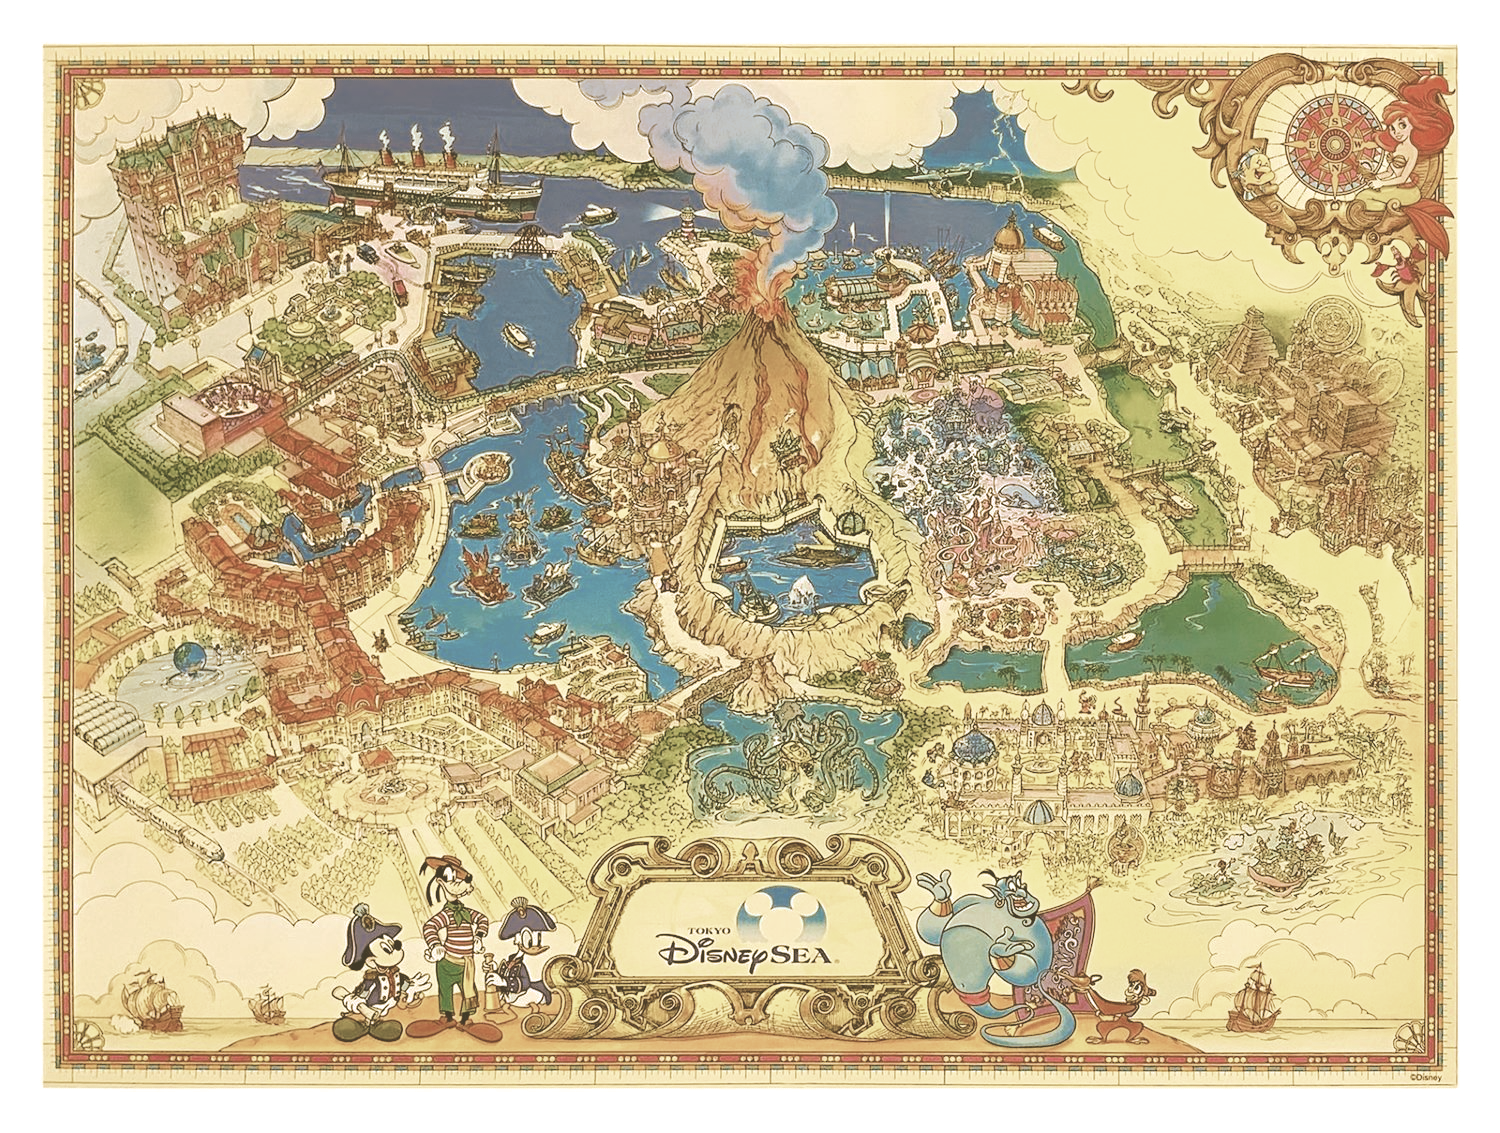 Illustrated sepia map of DisneySea park